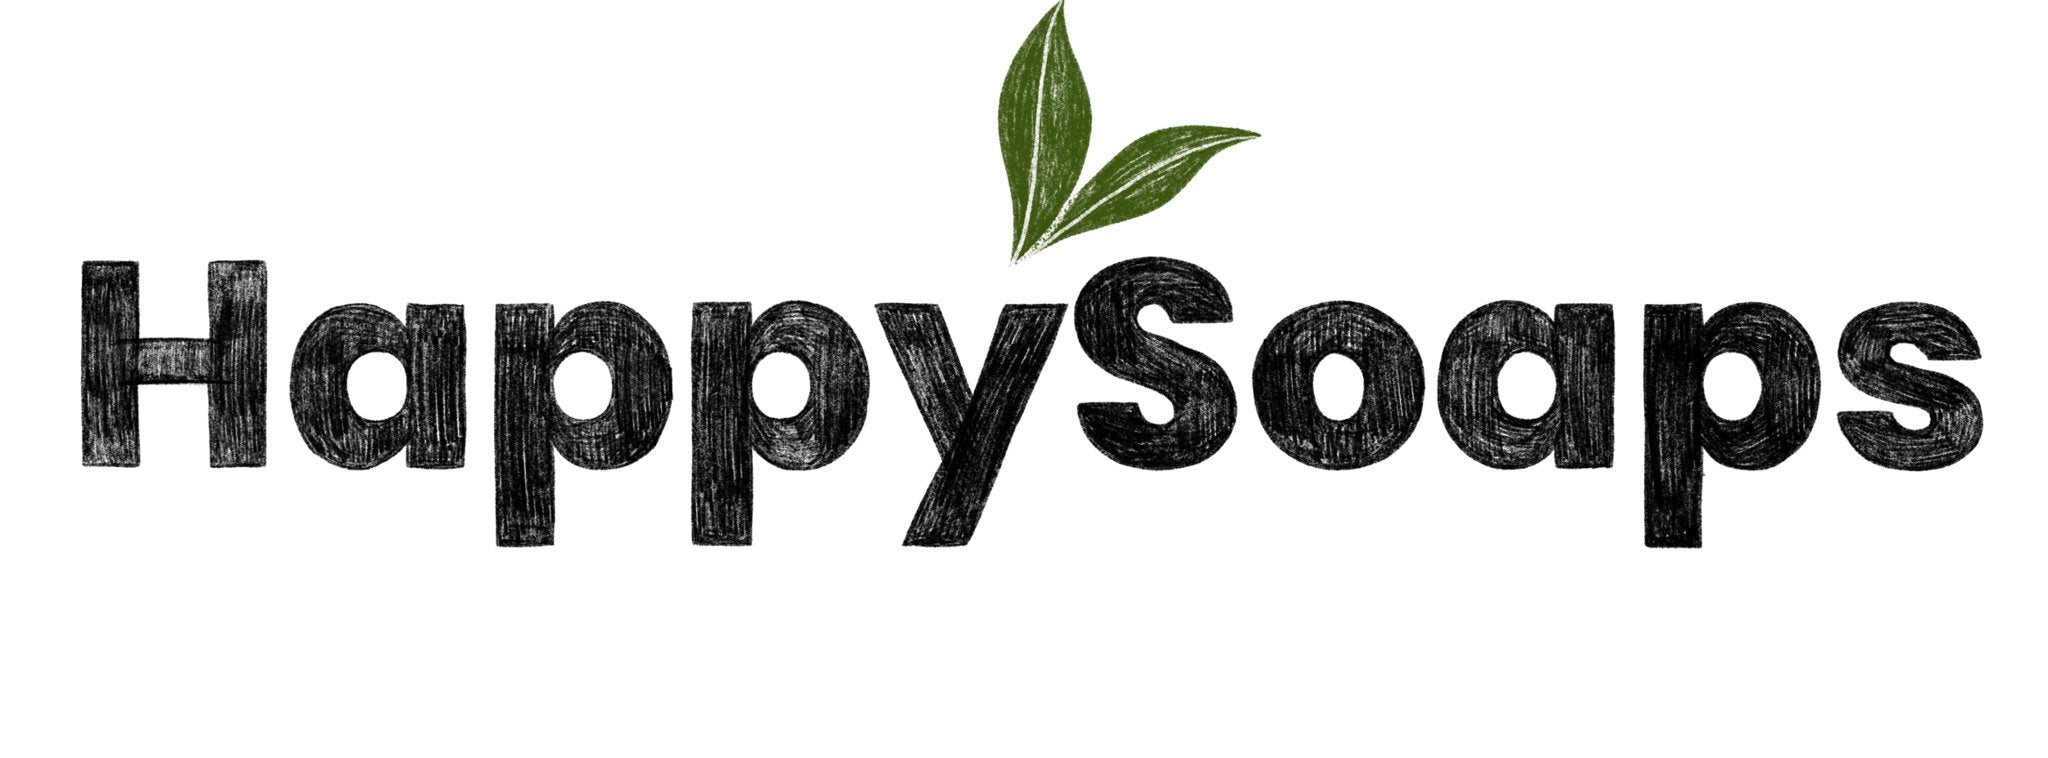 Body Wash Bar – Tea Tree en Pepermunt - NowVitamins - HappySoaps - 100% plasticvrije cosmetica - 8720256109259